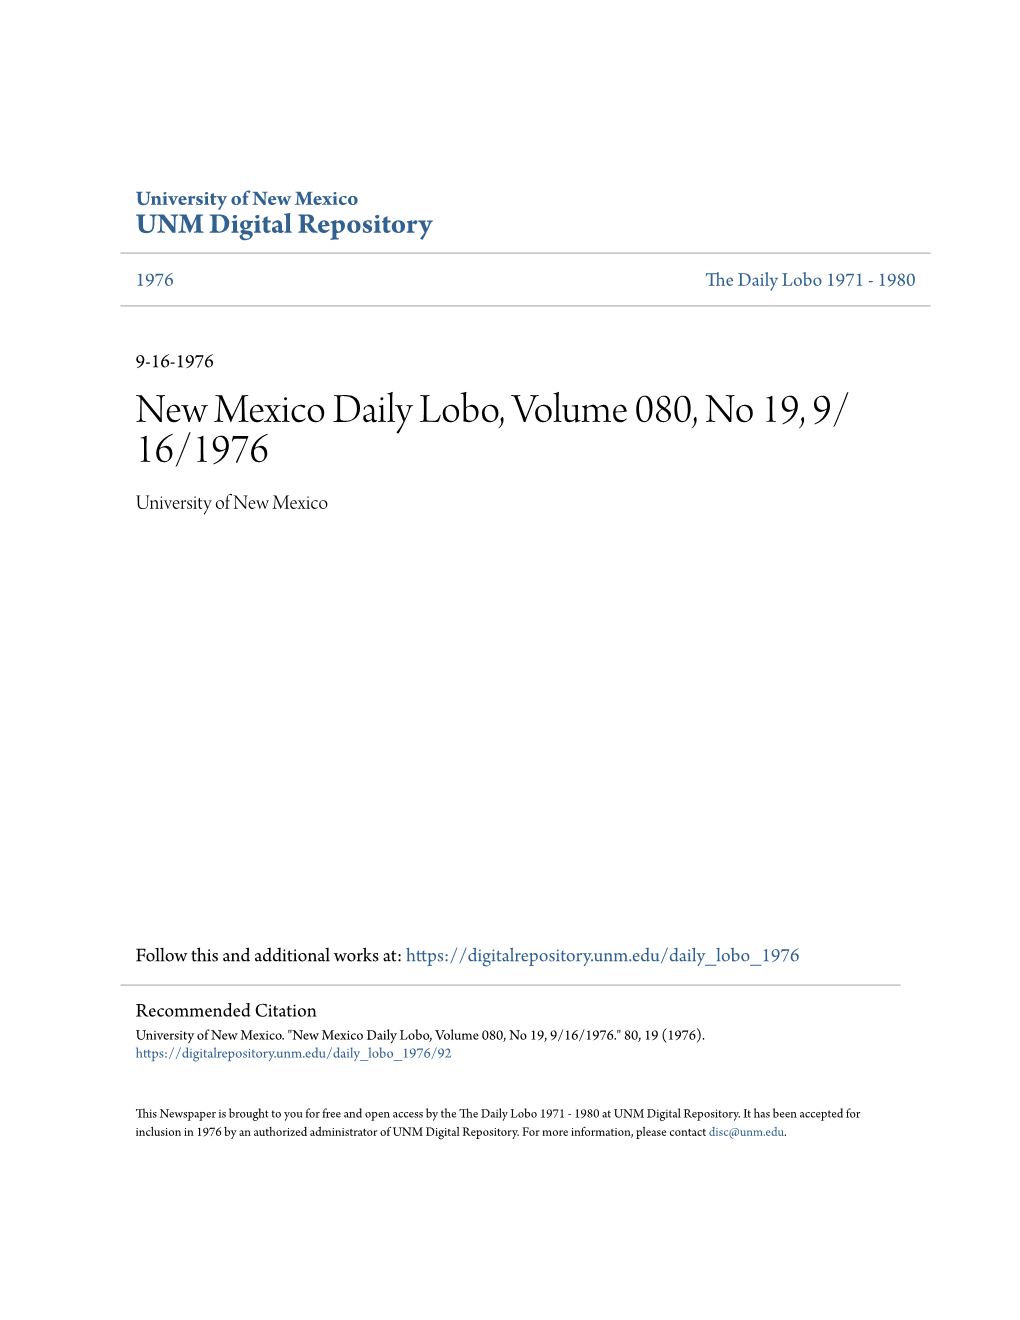 New Mexico Daily Lobo, Volume 080, No 19, 9/16/1976." 80, 19 (1976)